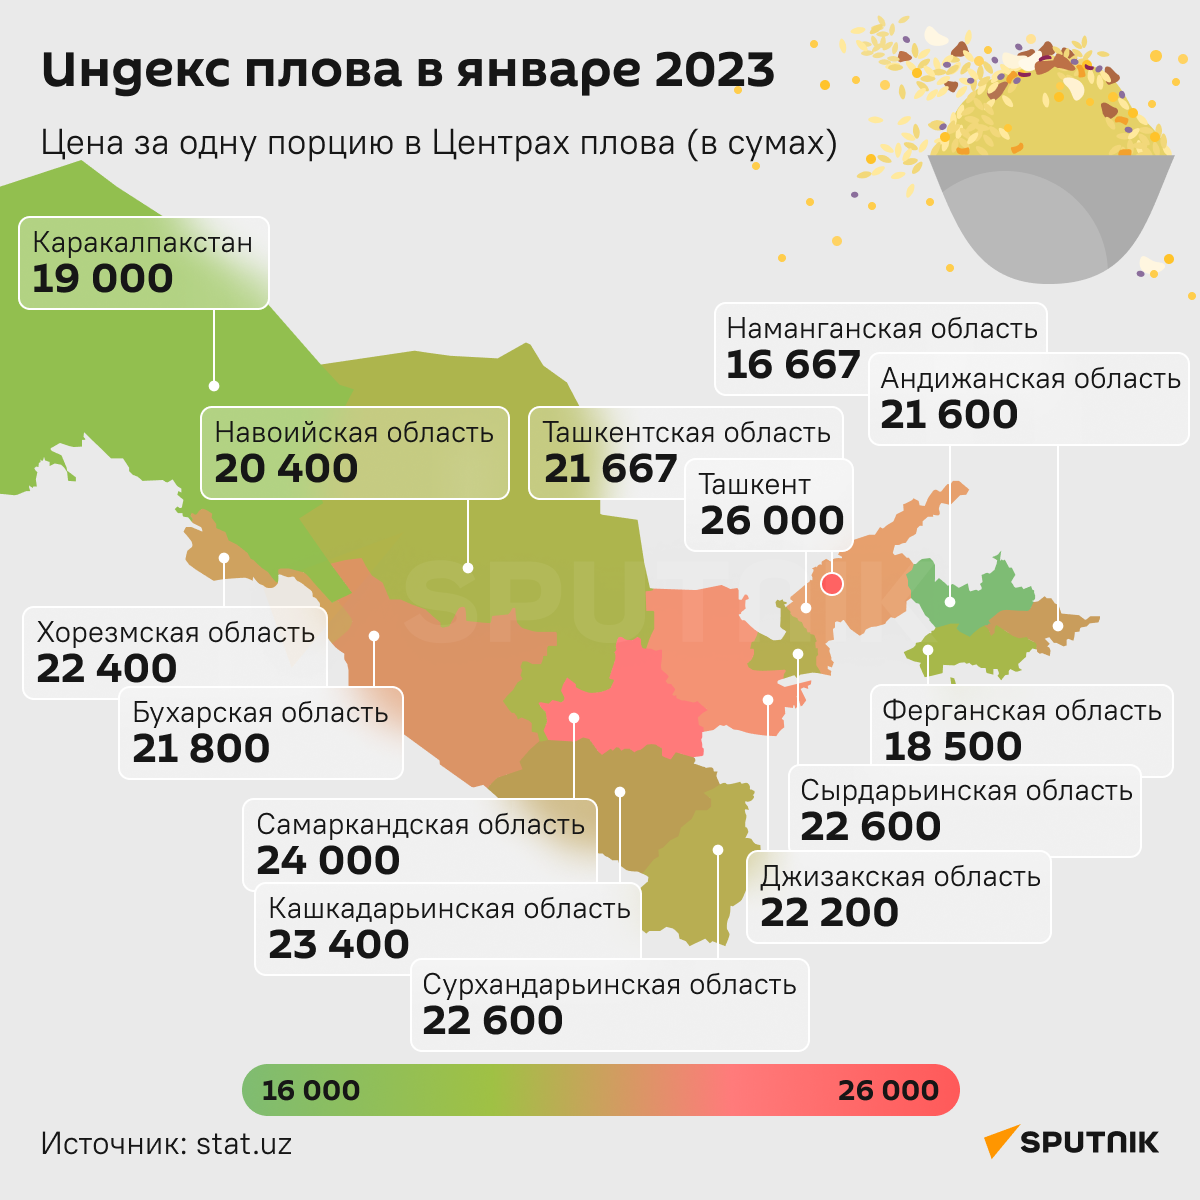 Индекс плова в январе 2023 инфографика - Sputnik Узбекистан